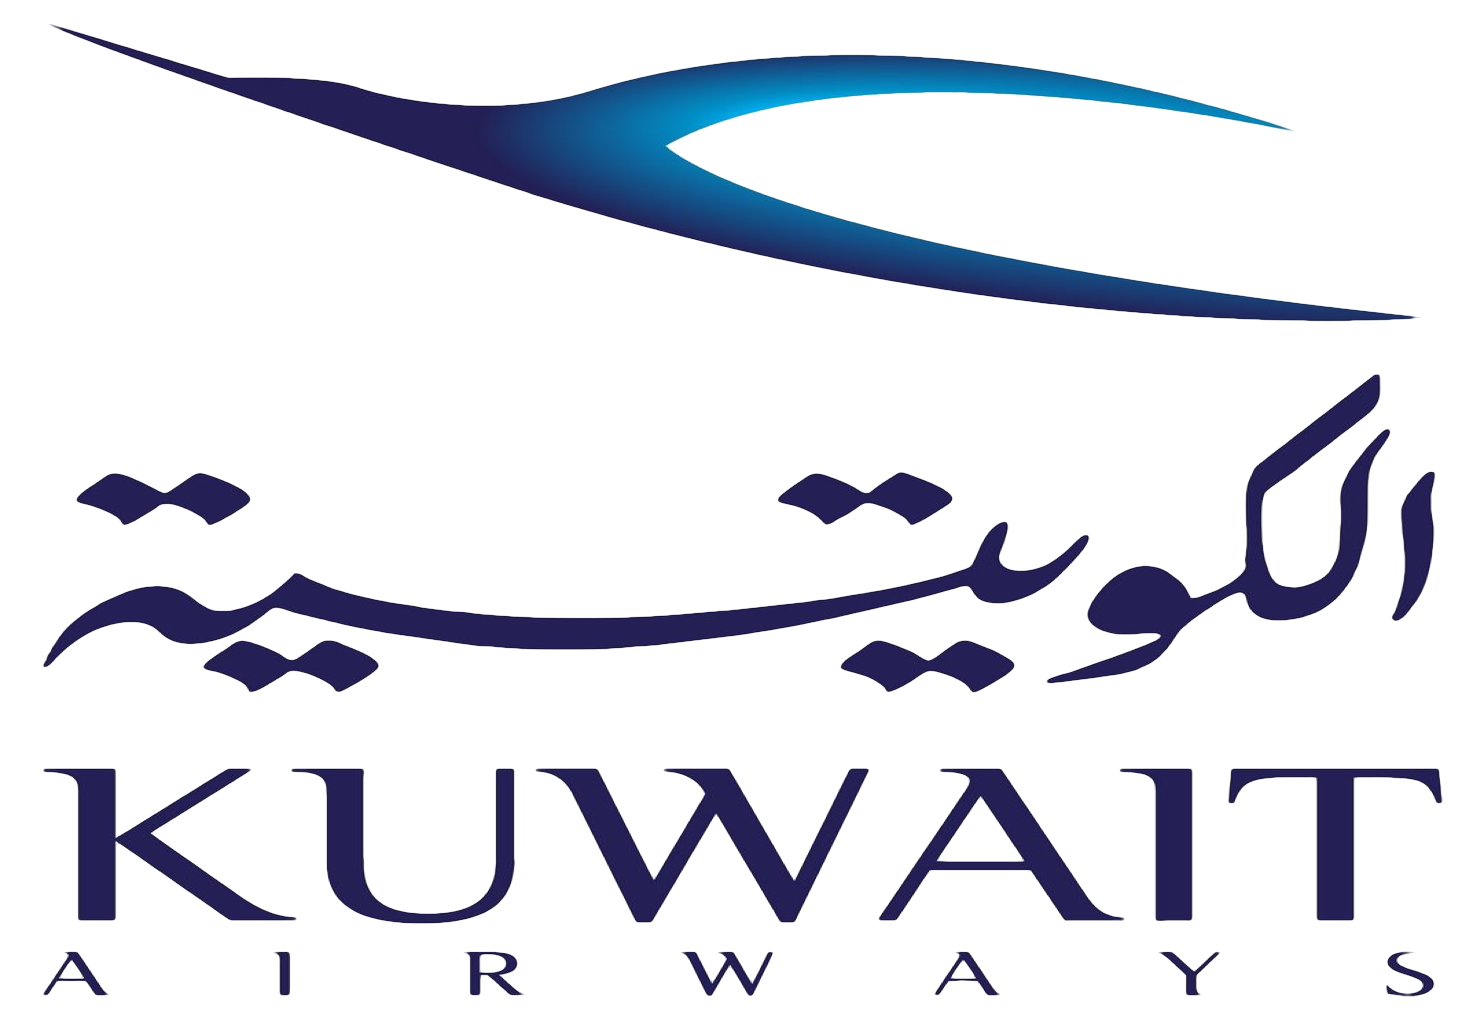 login-page-e-rebate-kuwait-airways